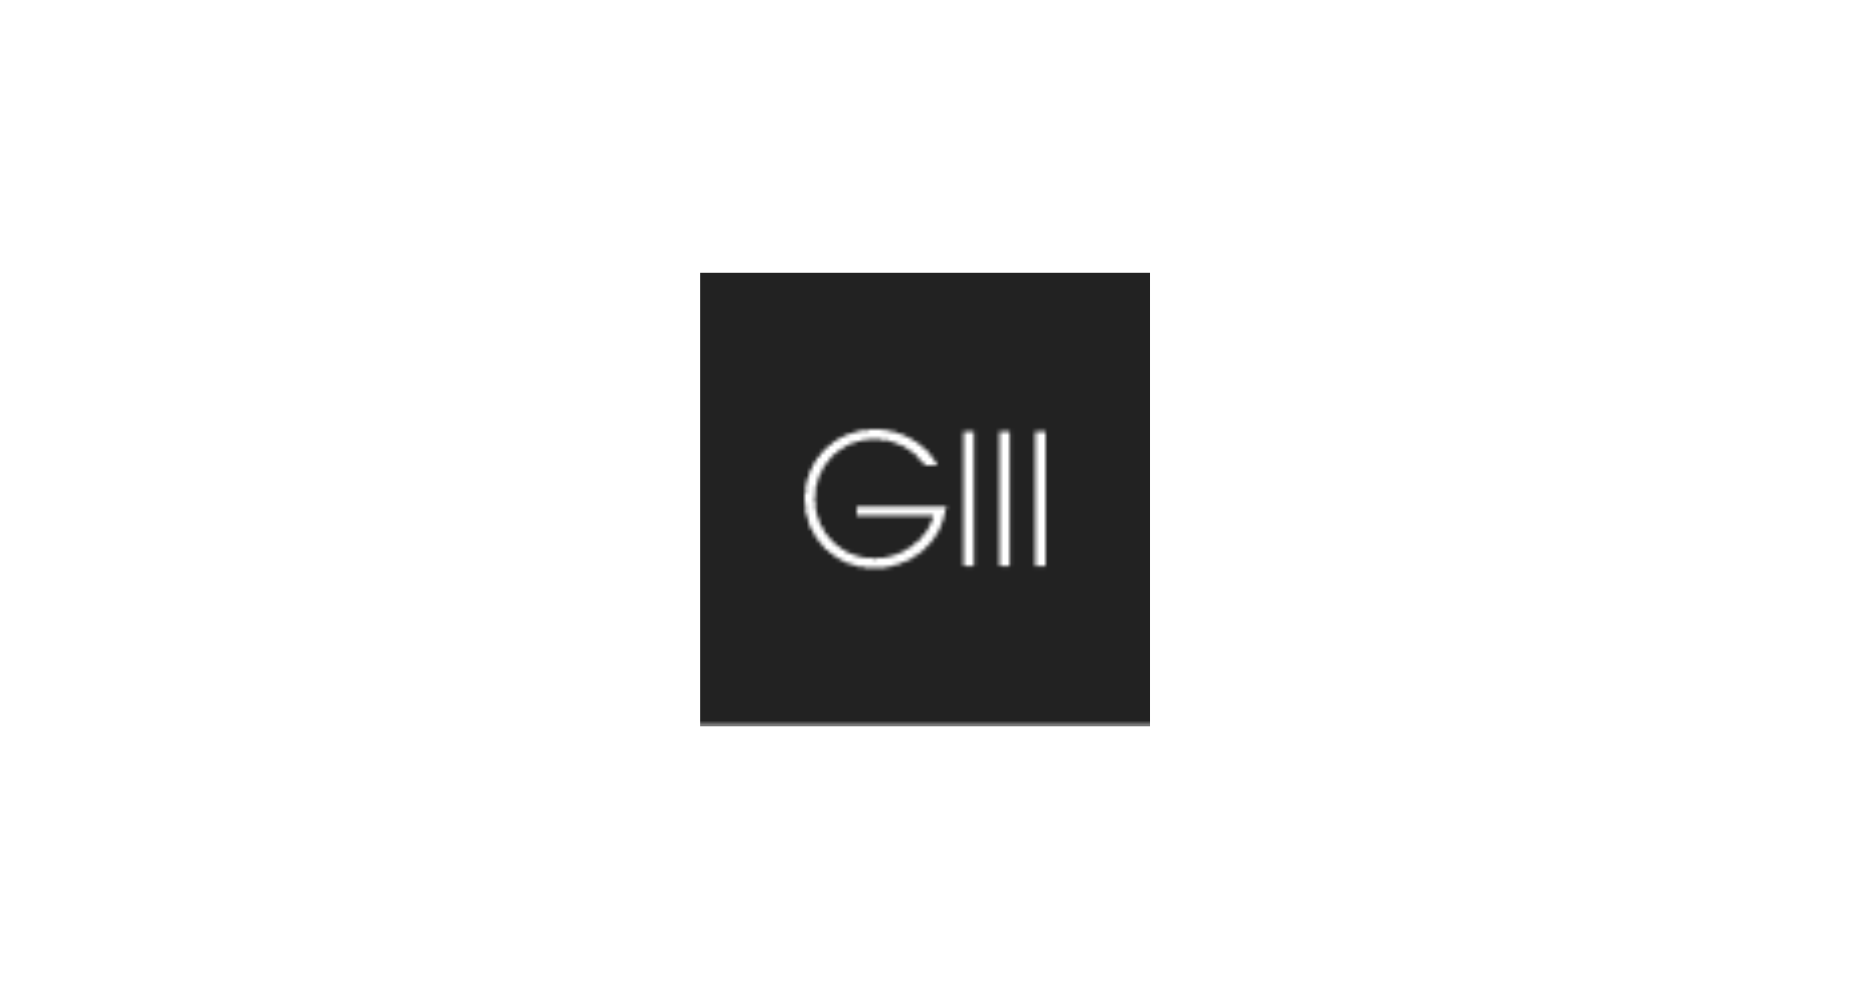 G-III Apparel Group (GIII)